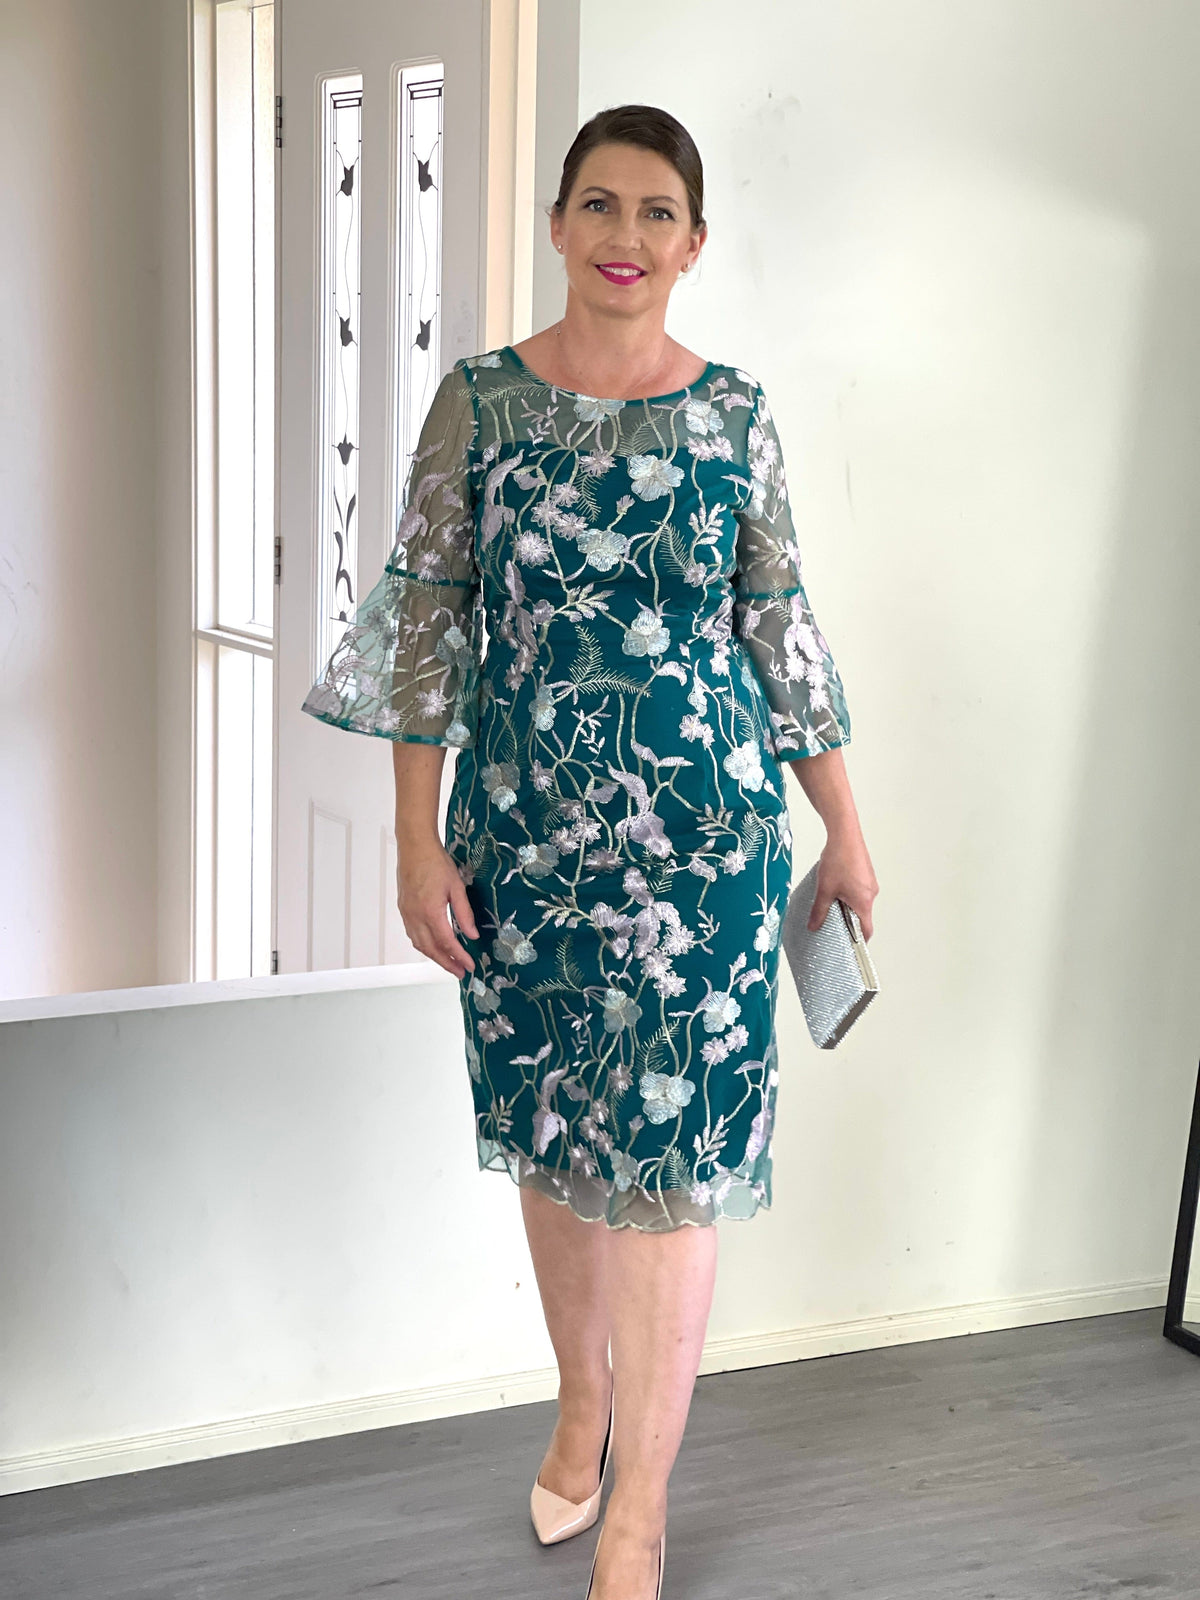 Miss Anne DRESSES Tearose Emerald Evening Dress